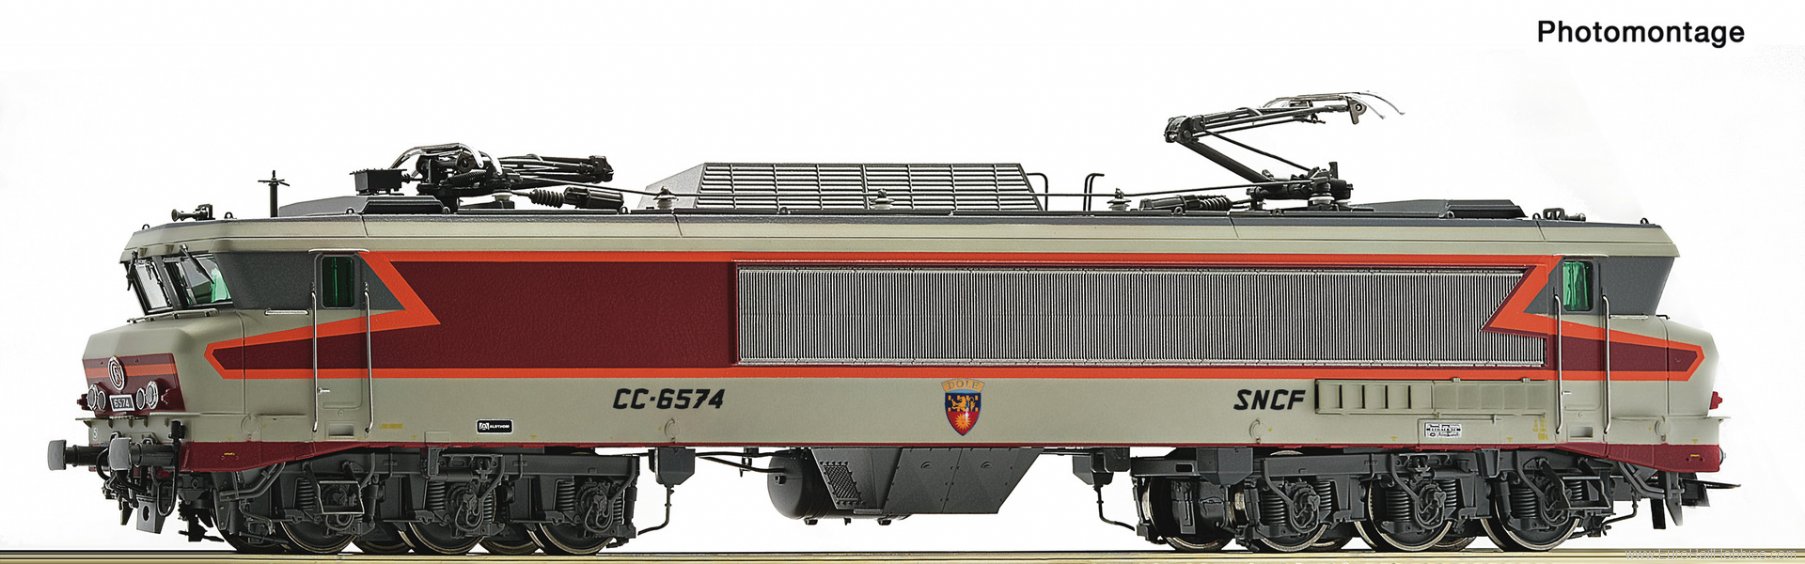 Roco 78619 Electric locomotive CC 6574, SNCF (AC Digital